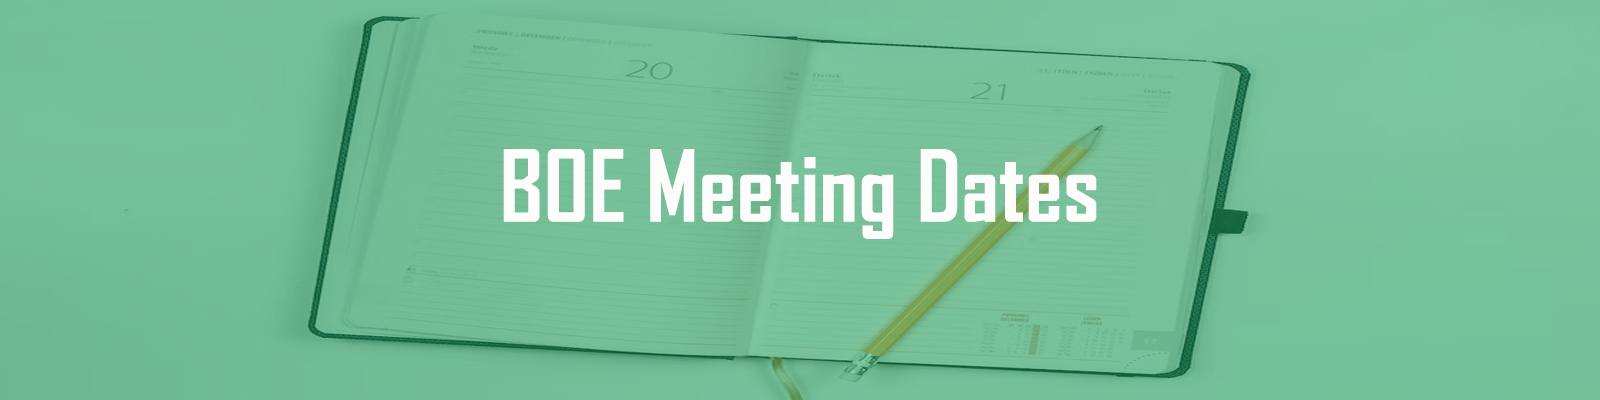 BOE Meeting Dates